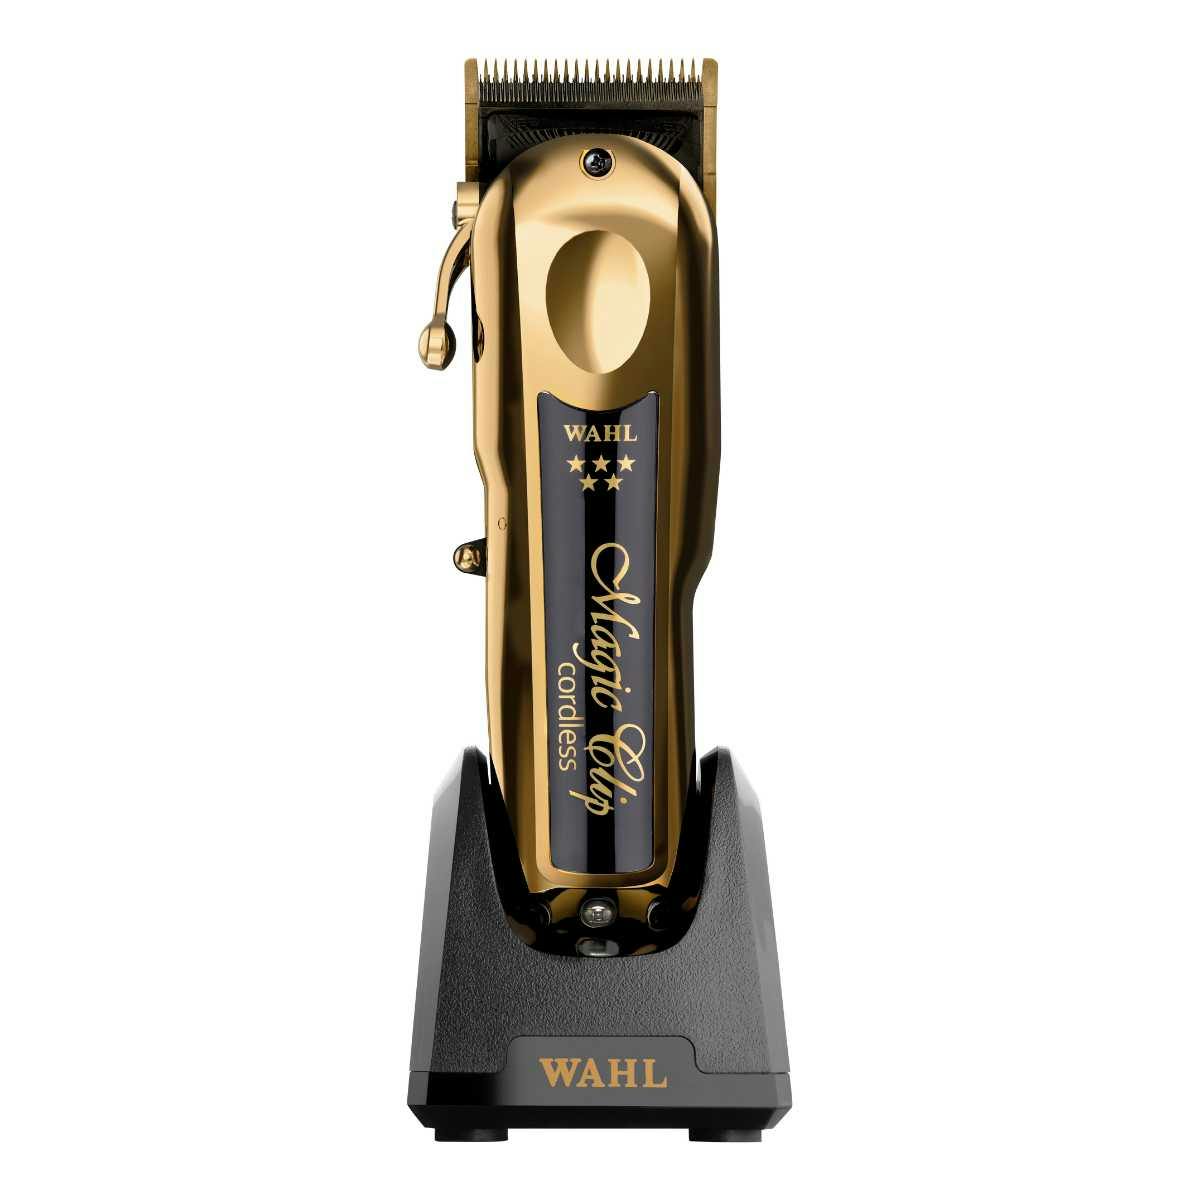 WAHL – Gold Cordless Magic Clip